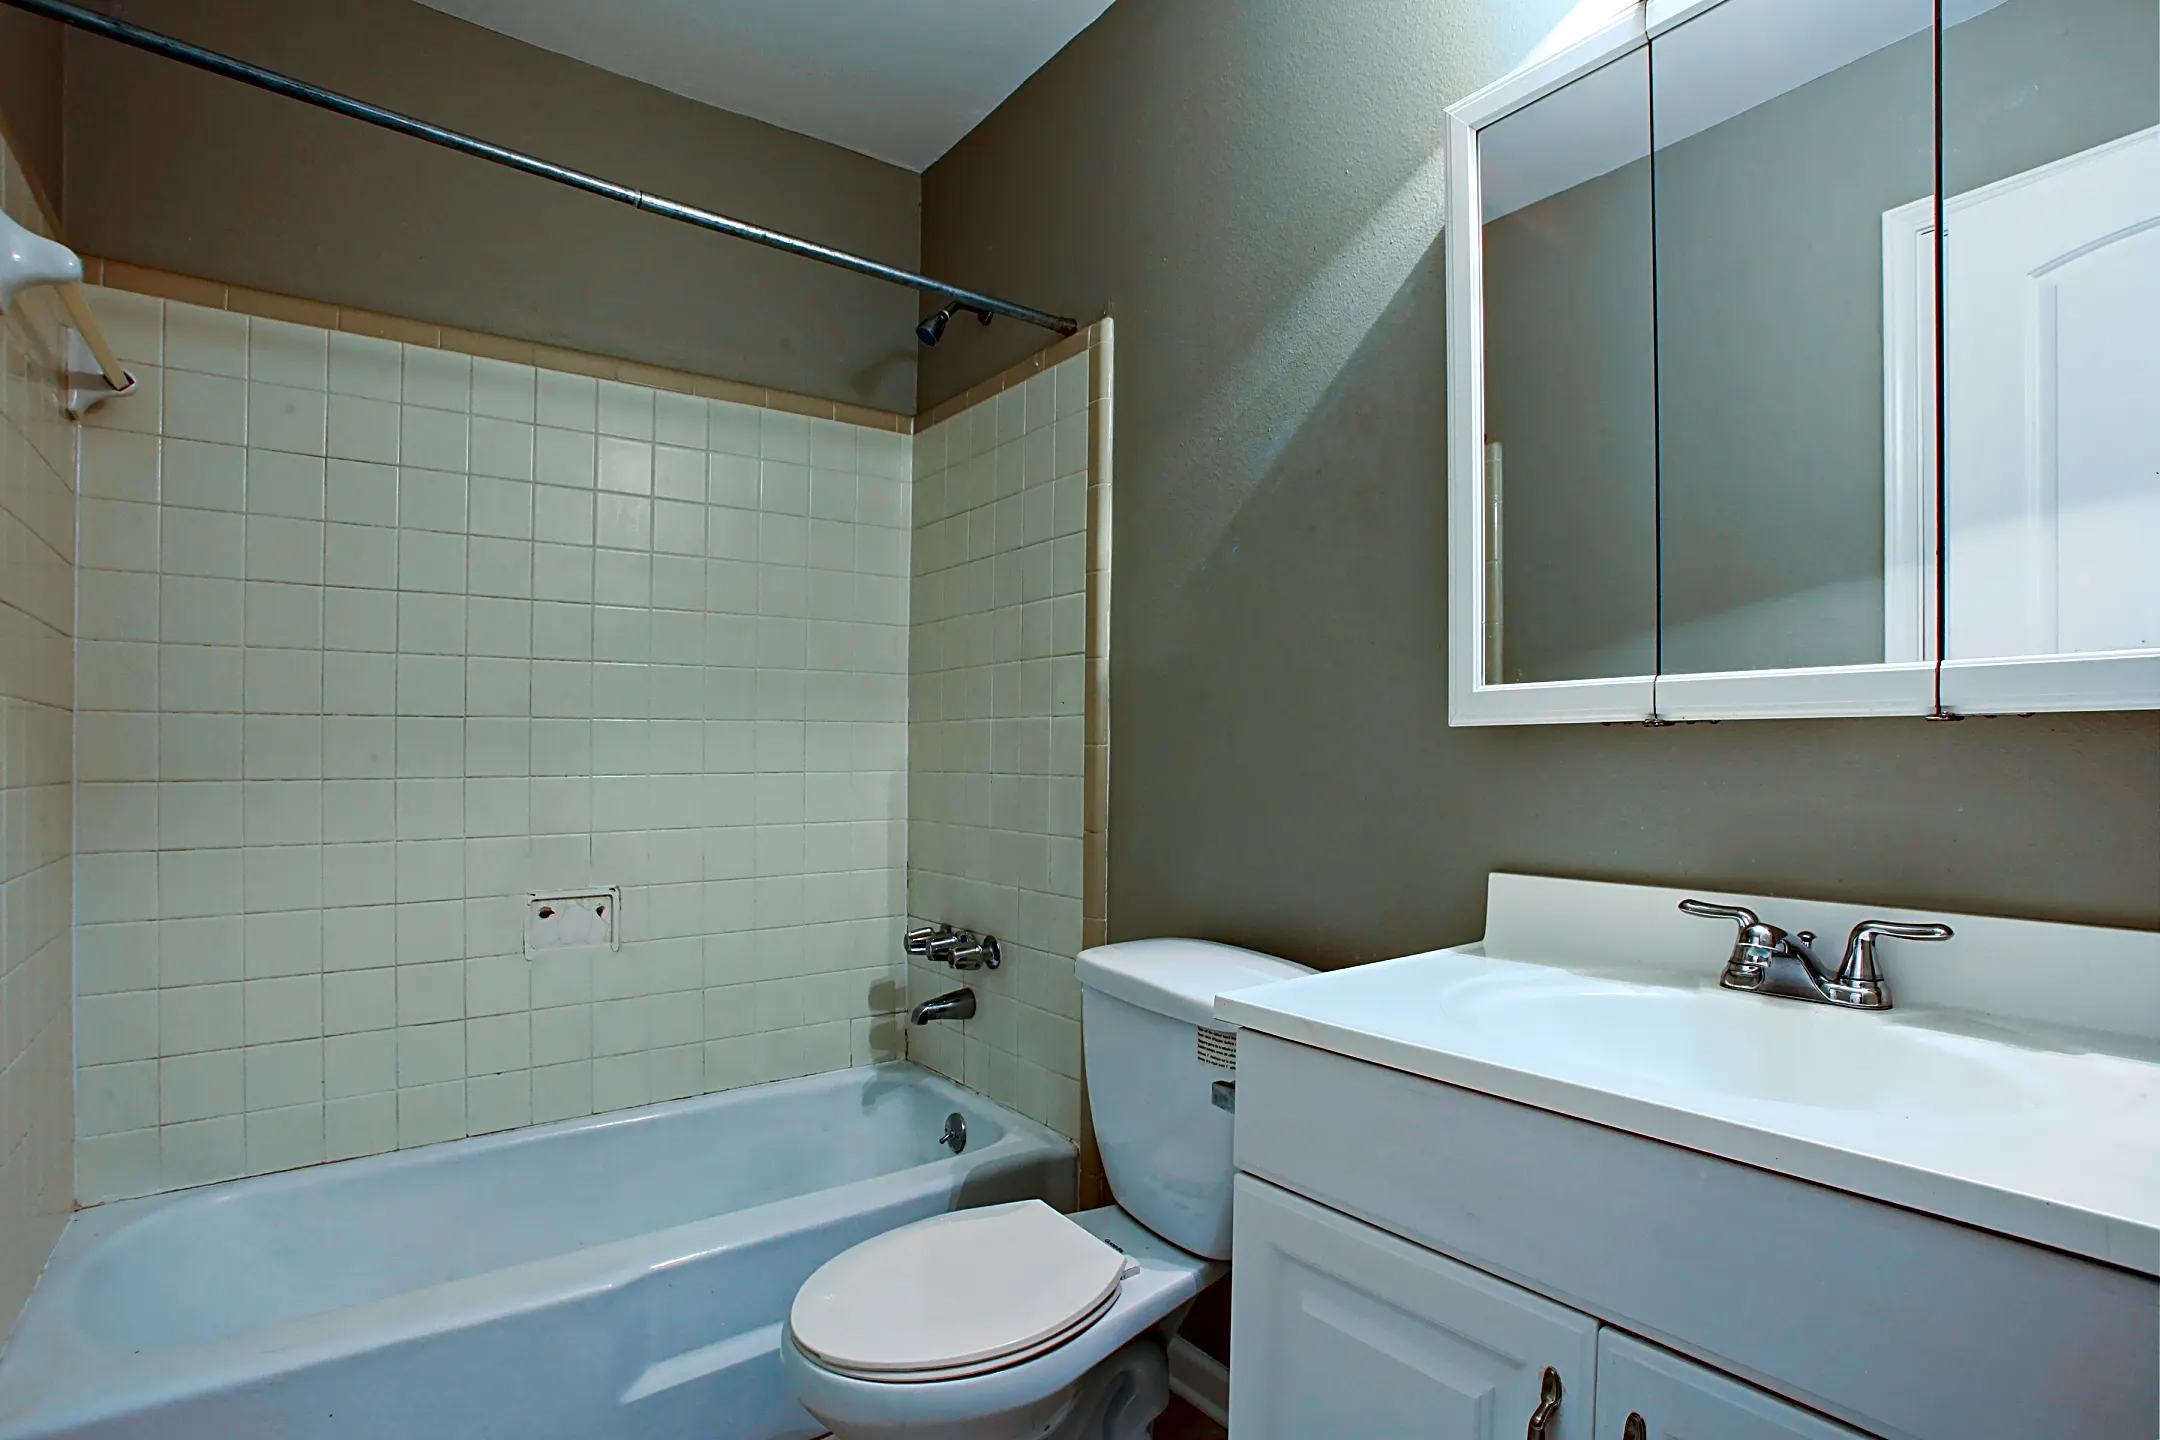 Bathroom - Gulf South Real Estate - Covington, LA